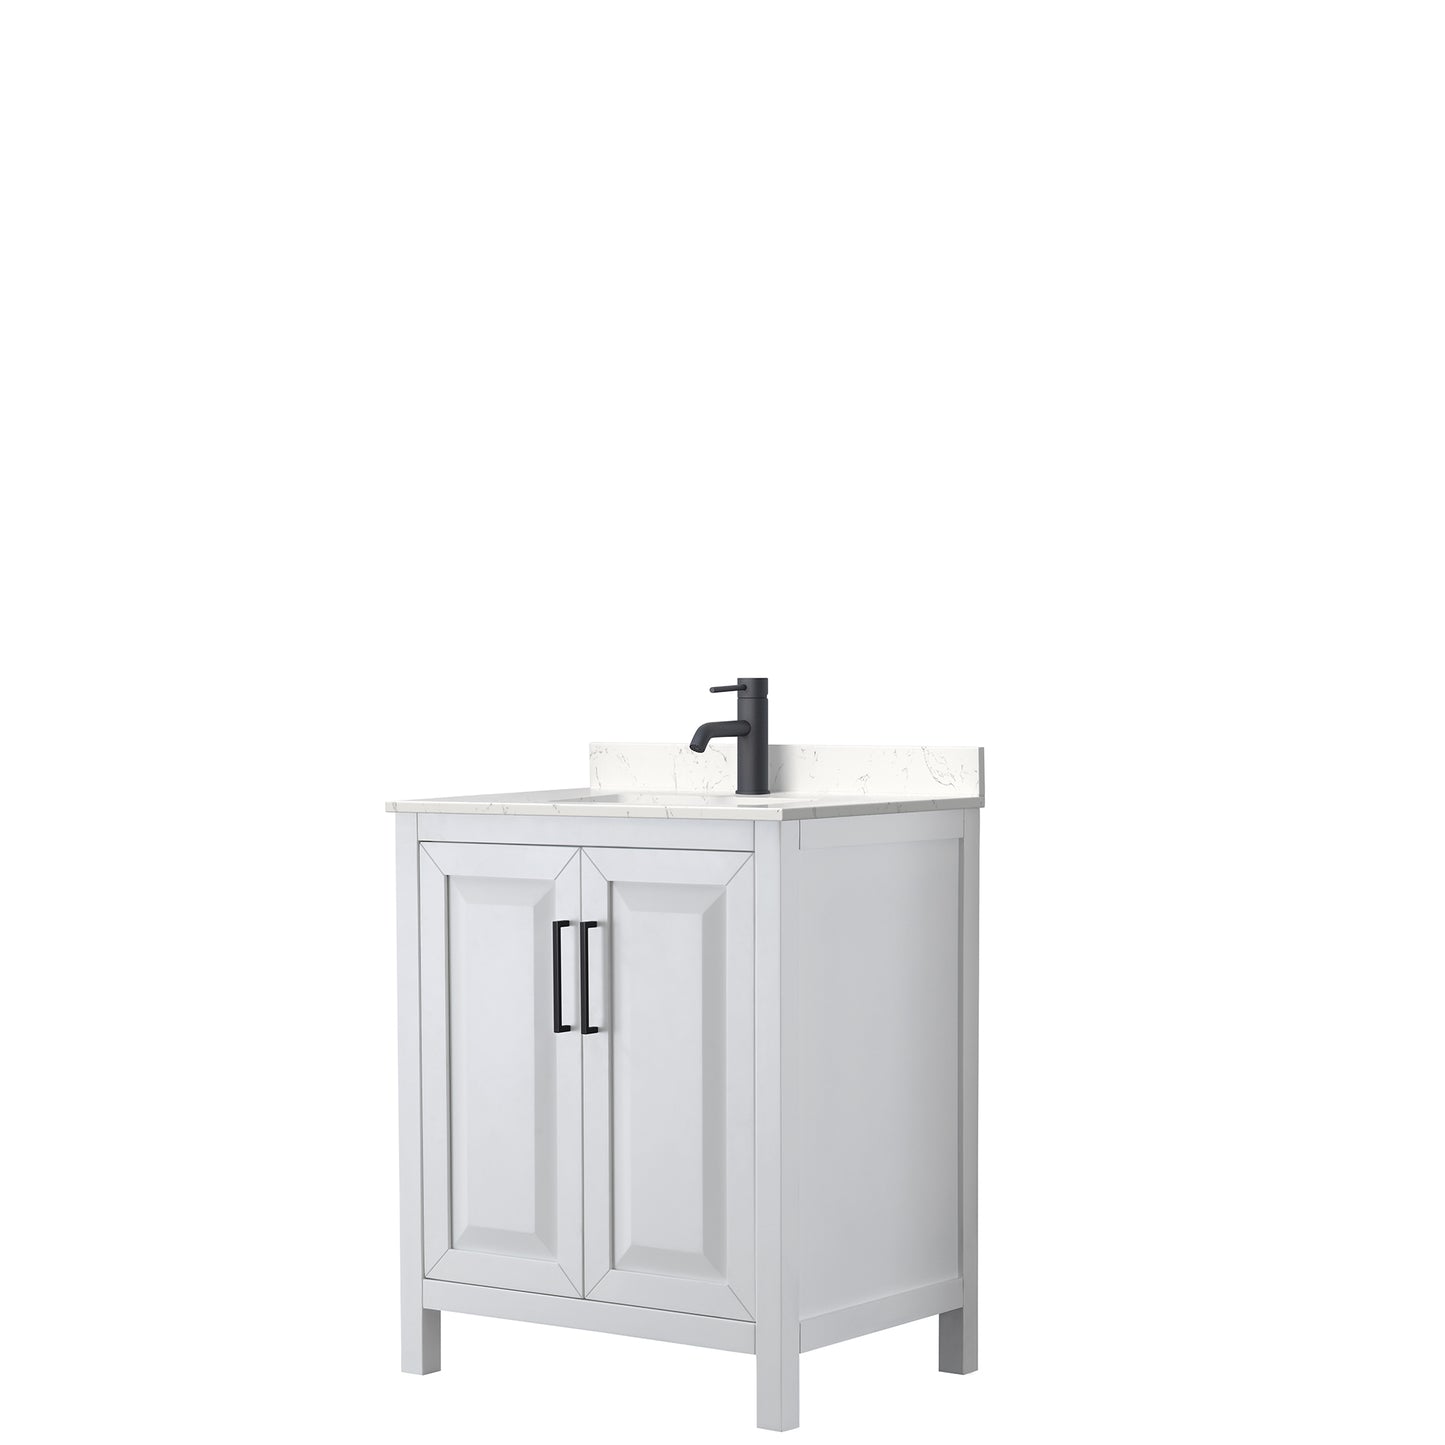 Wyndham Daria 30 Inch Single Bathroom Vanity Light-Vein Carrara Cultured Marble Countertop with Undermount Square Sink in Matte Black Trim - Luxe Bathroom Vanities